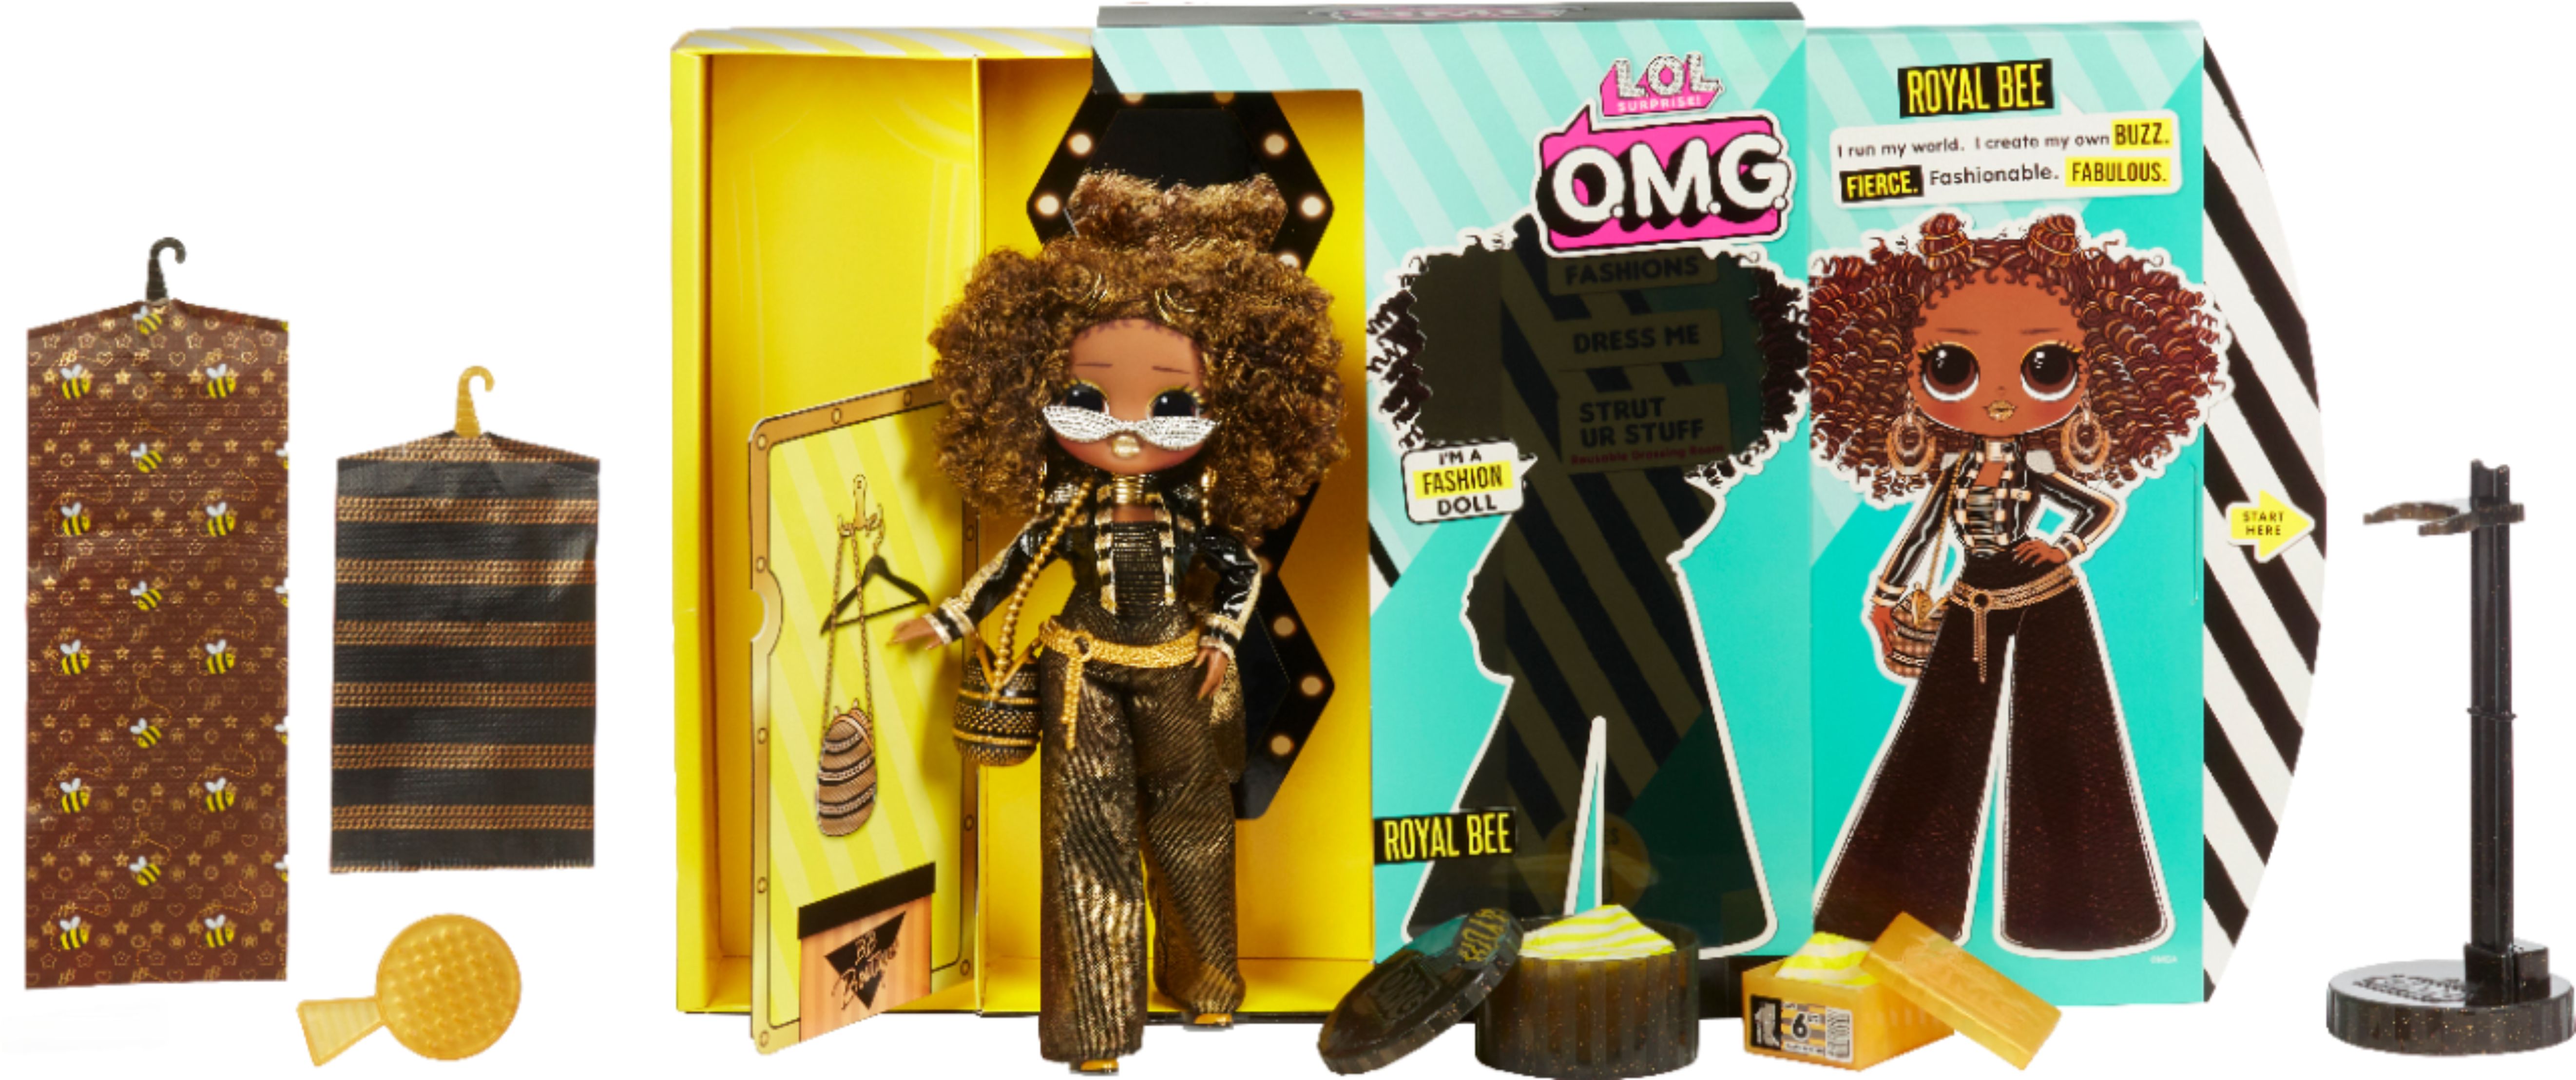 L.O.L. Surprise! LOL Surprise OPP OMG Doll Assortment  - Best Buy